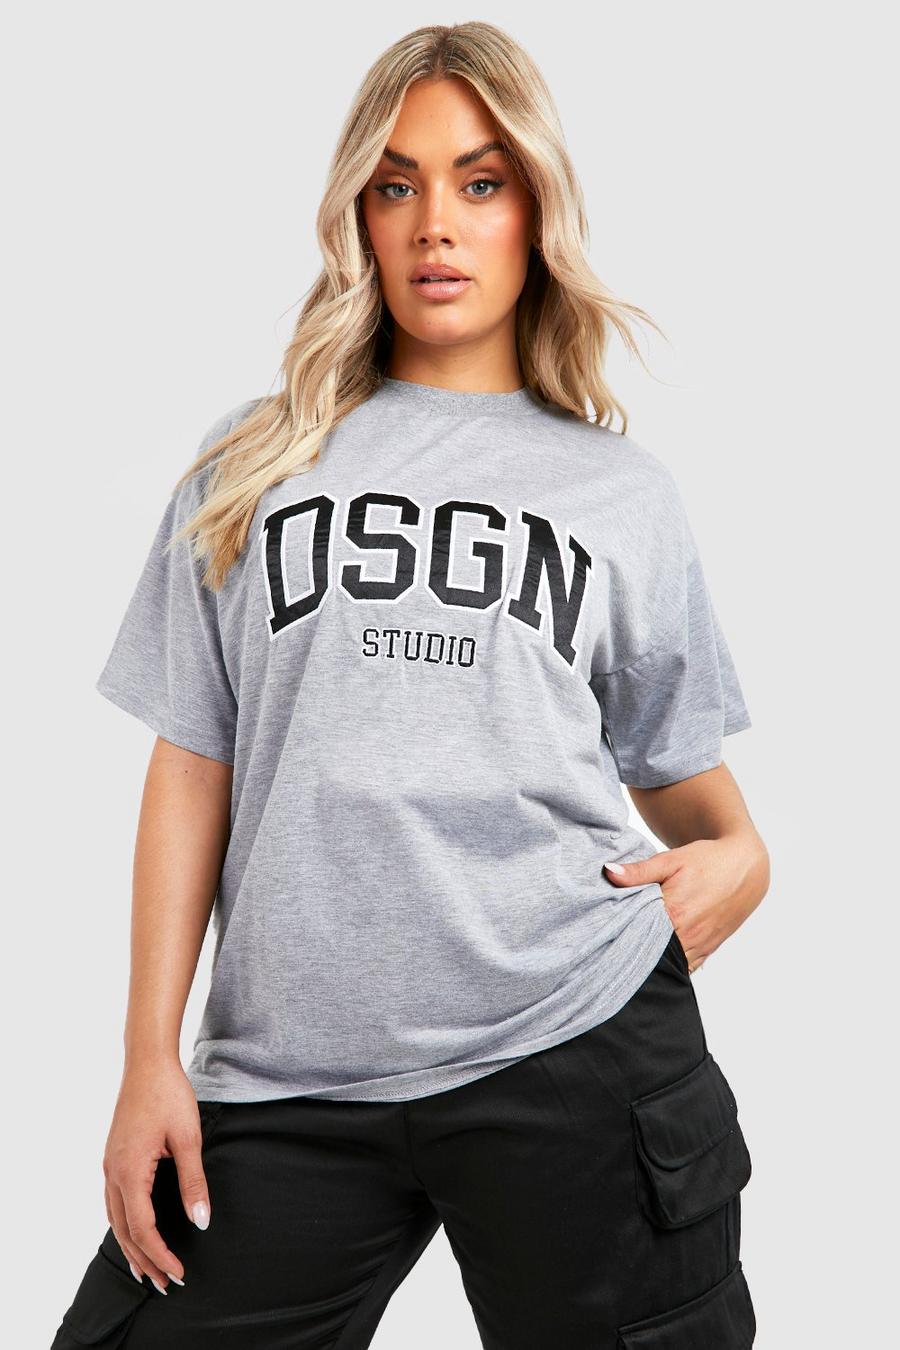 Grey marl Plus Applique Dsgn Studio Oversized T-Shirt image number 1